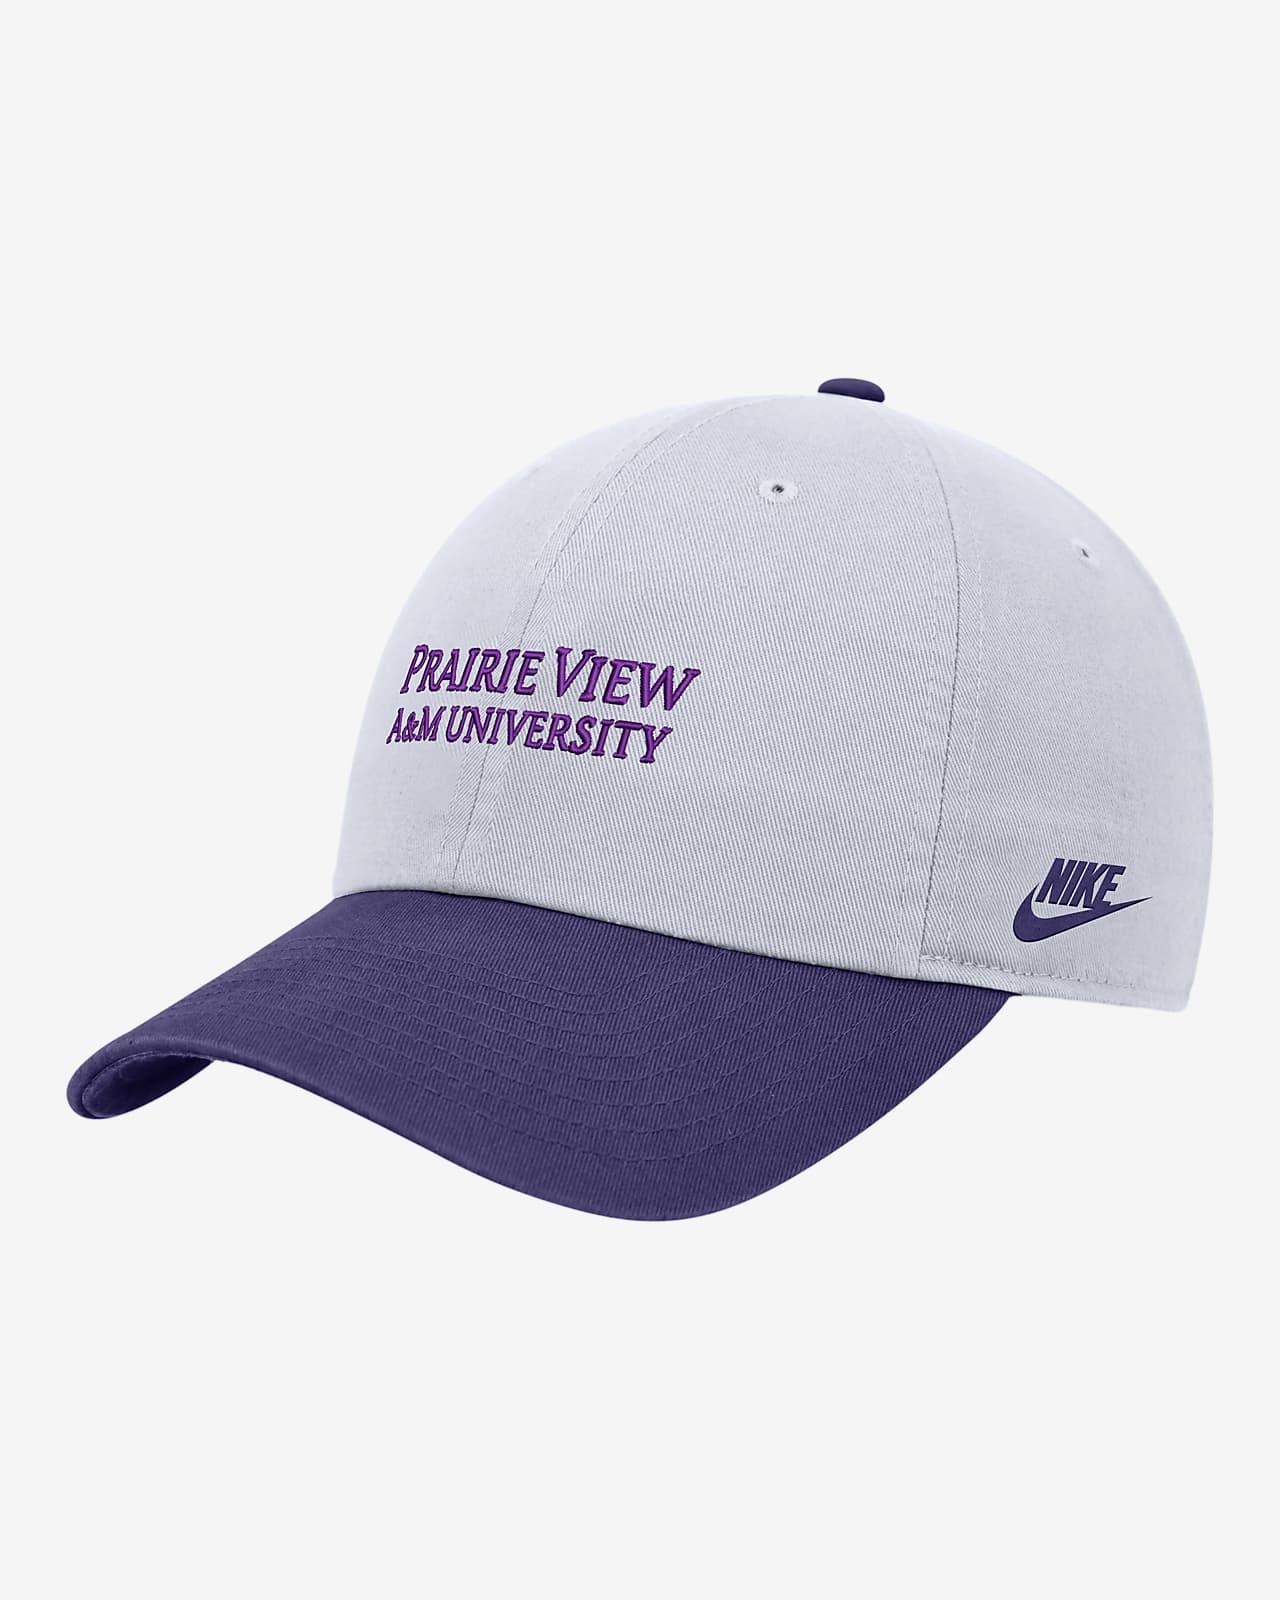 Prairie View A&M Nike College Adjustable Cap